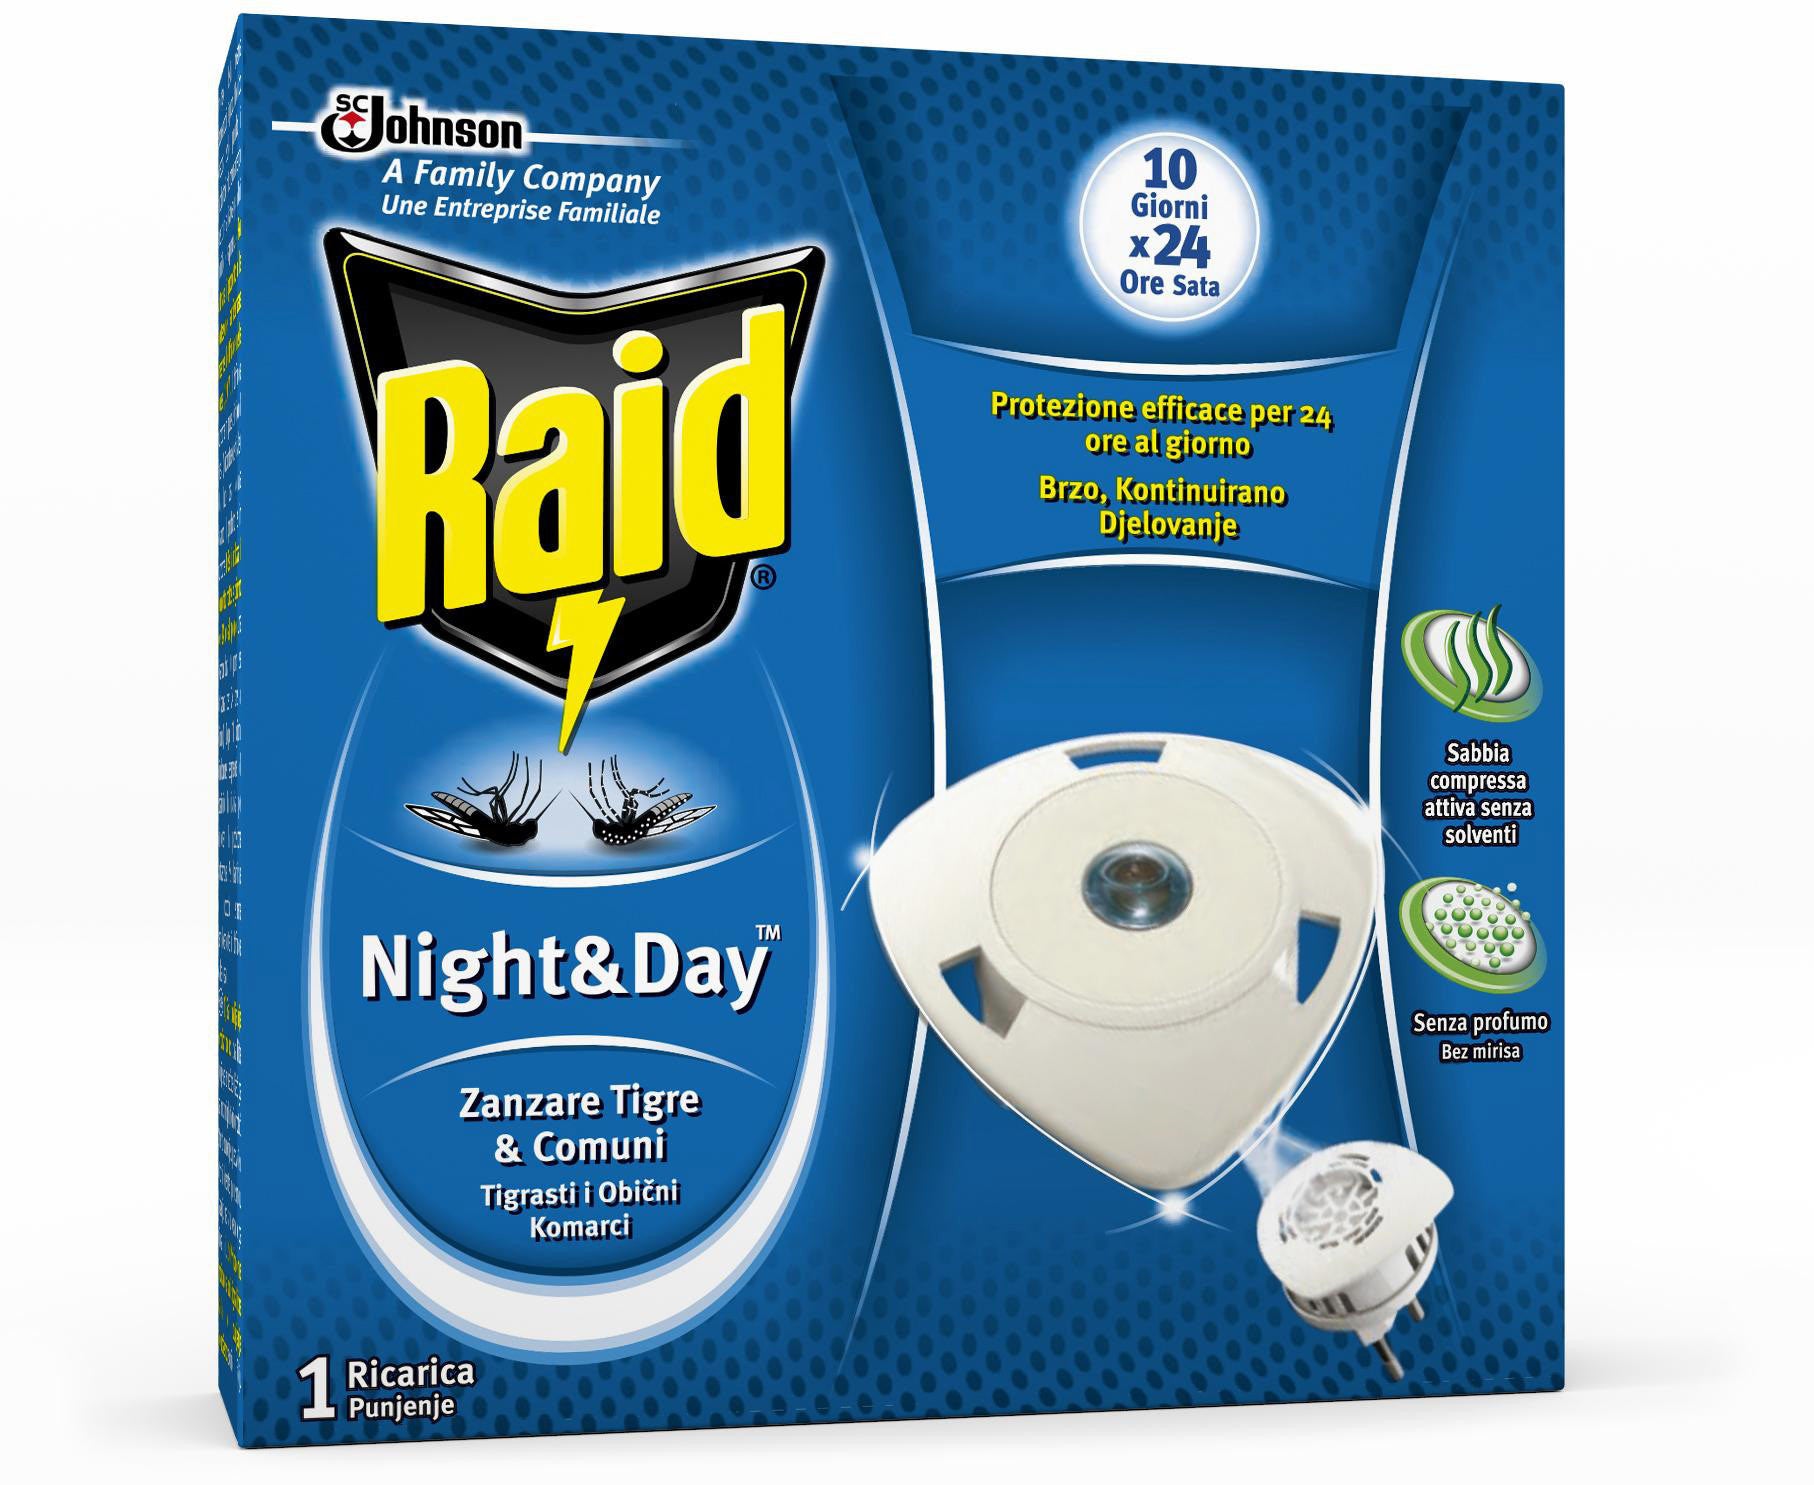 Raid nightday zanzare 1 ricarica S.C.JOHNSON ITALY